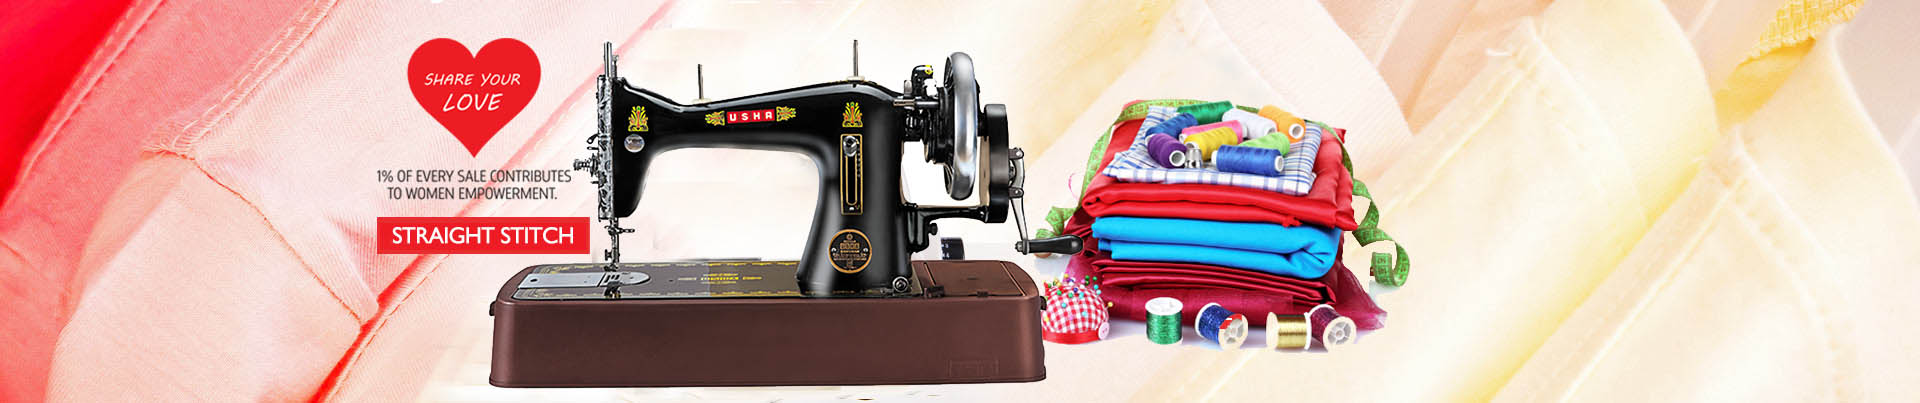 Straight Stitch Sewing Machine